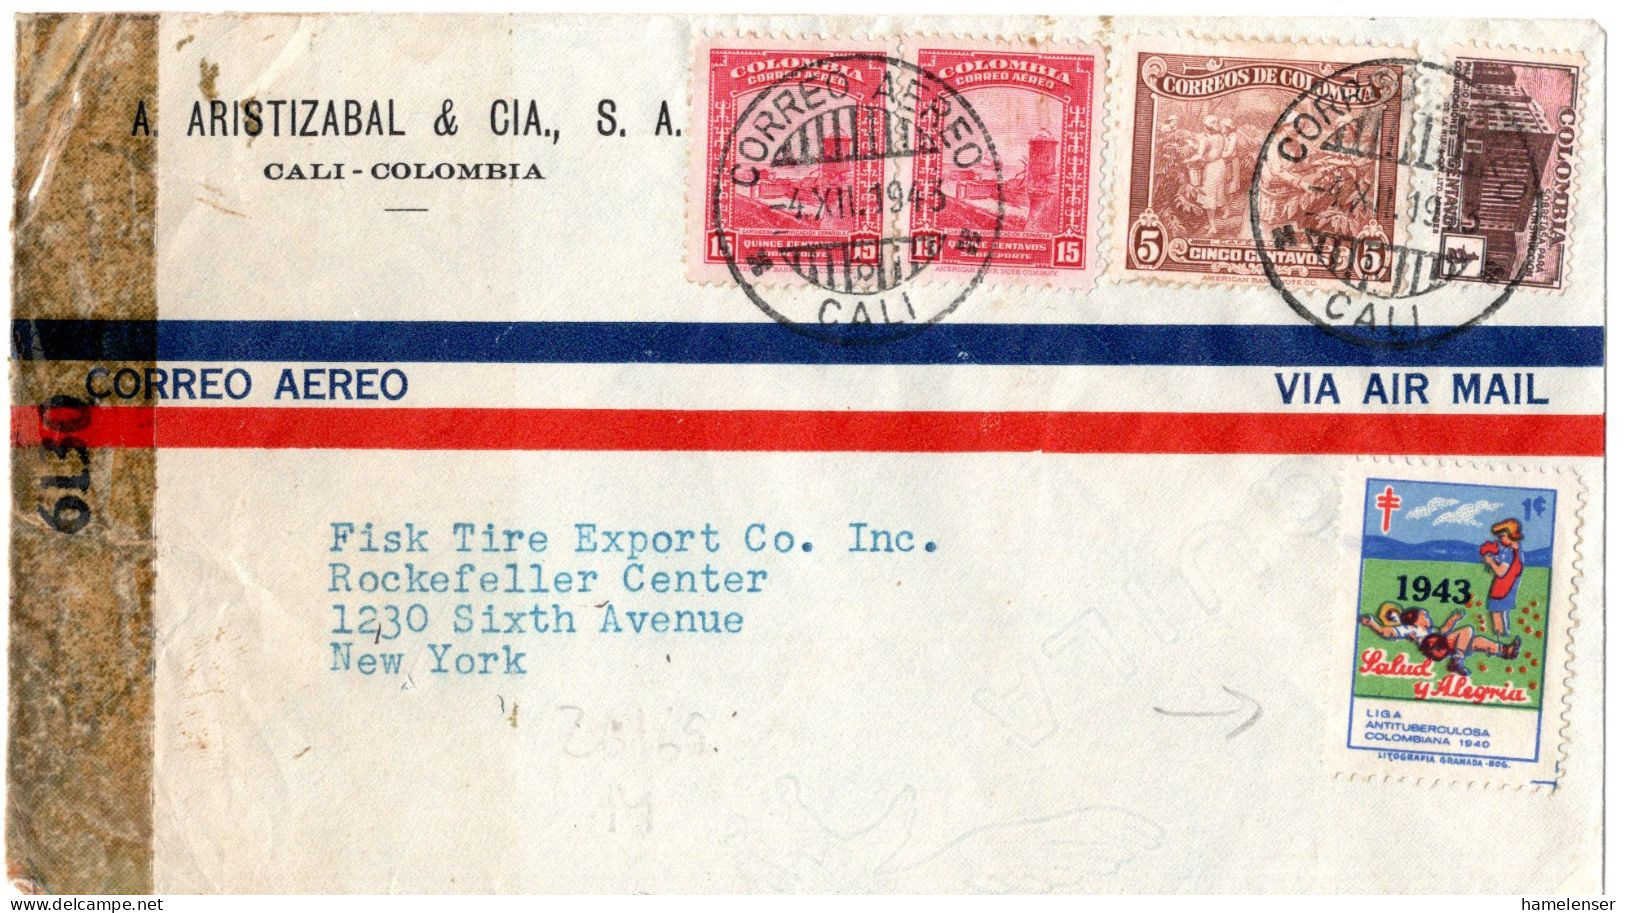 72443 - Kolumbien - 1943 - 2@15c Luftpost MiF A LpBf CALI -> New York, NY (USA), M US-Zensur & Tbc-Aufkleber - Colombia